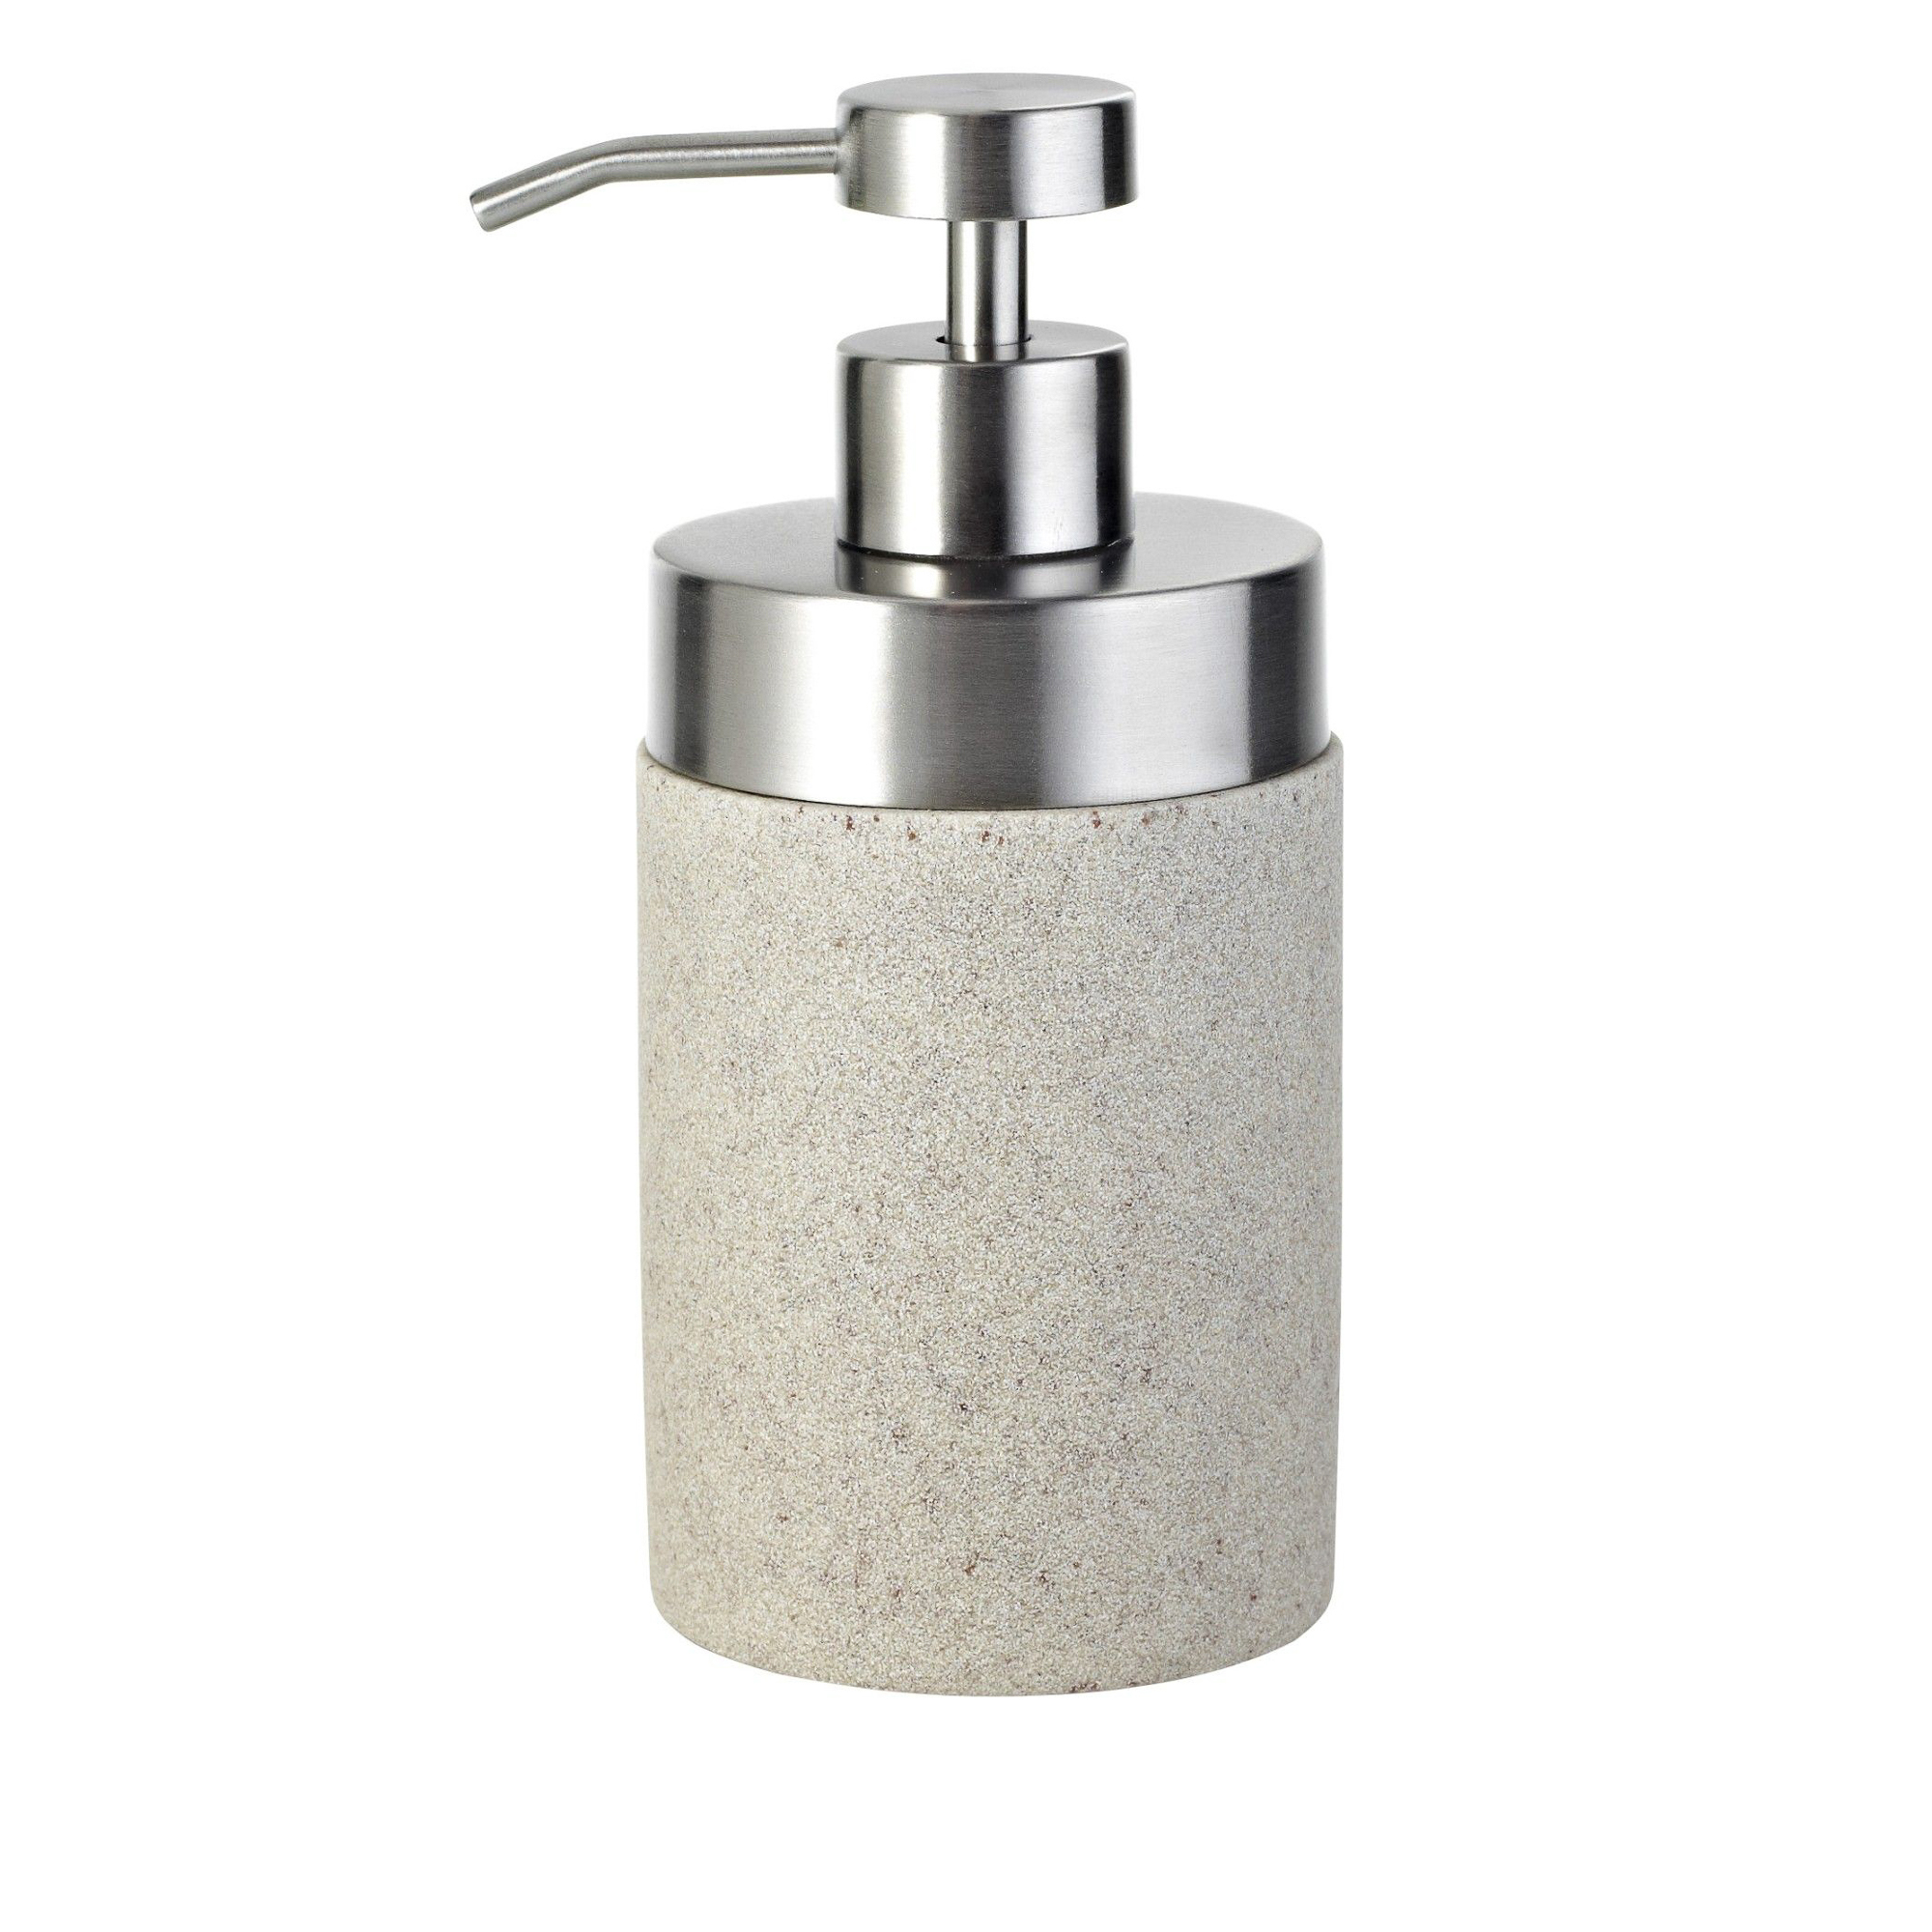 Дозатор для жидкого мыла Stone бежевый Ridder дозатор для жидкого мыла ridder stone серый 8 5х7 3х19 8 см